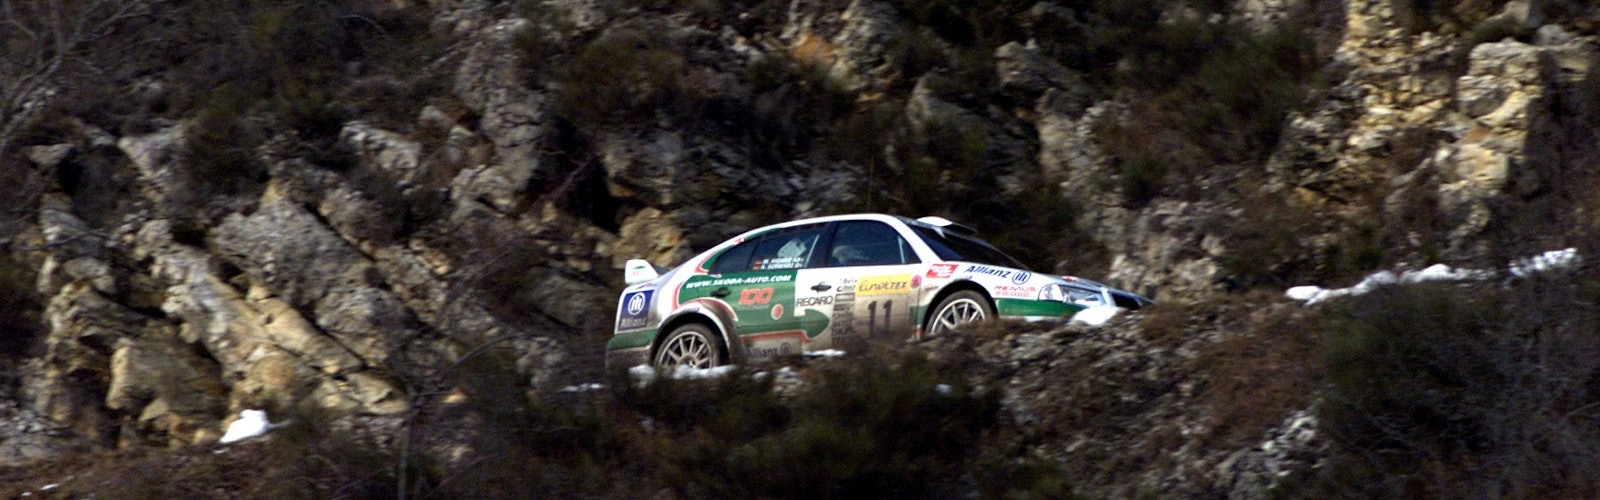 Rally Montecarlo Monte Carlo (MC) 18-21 01 2001